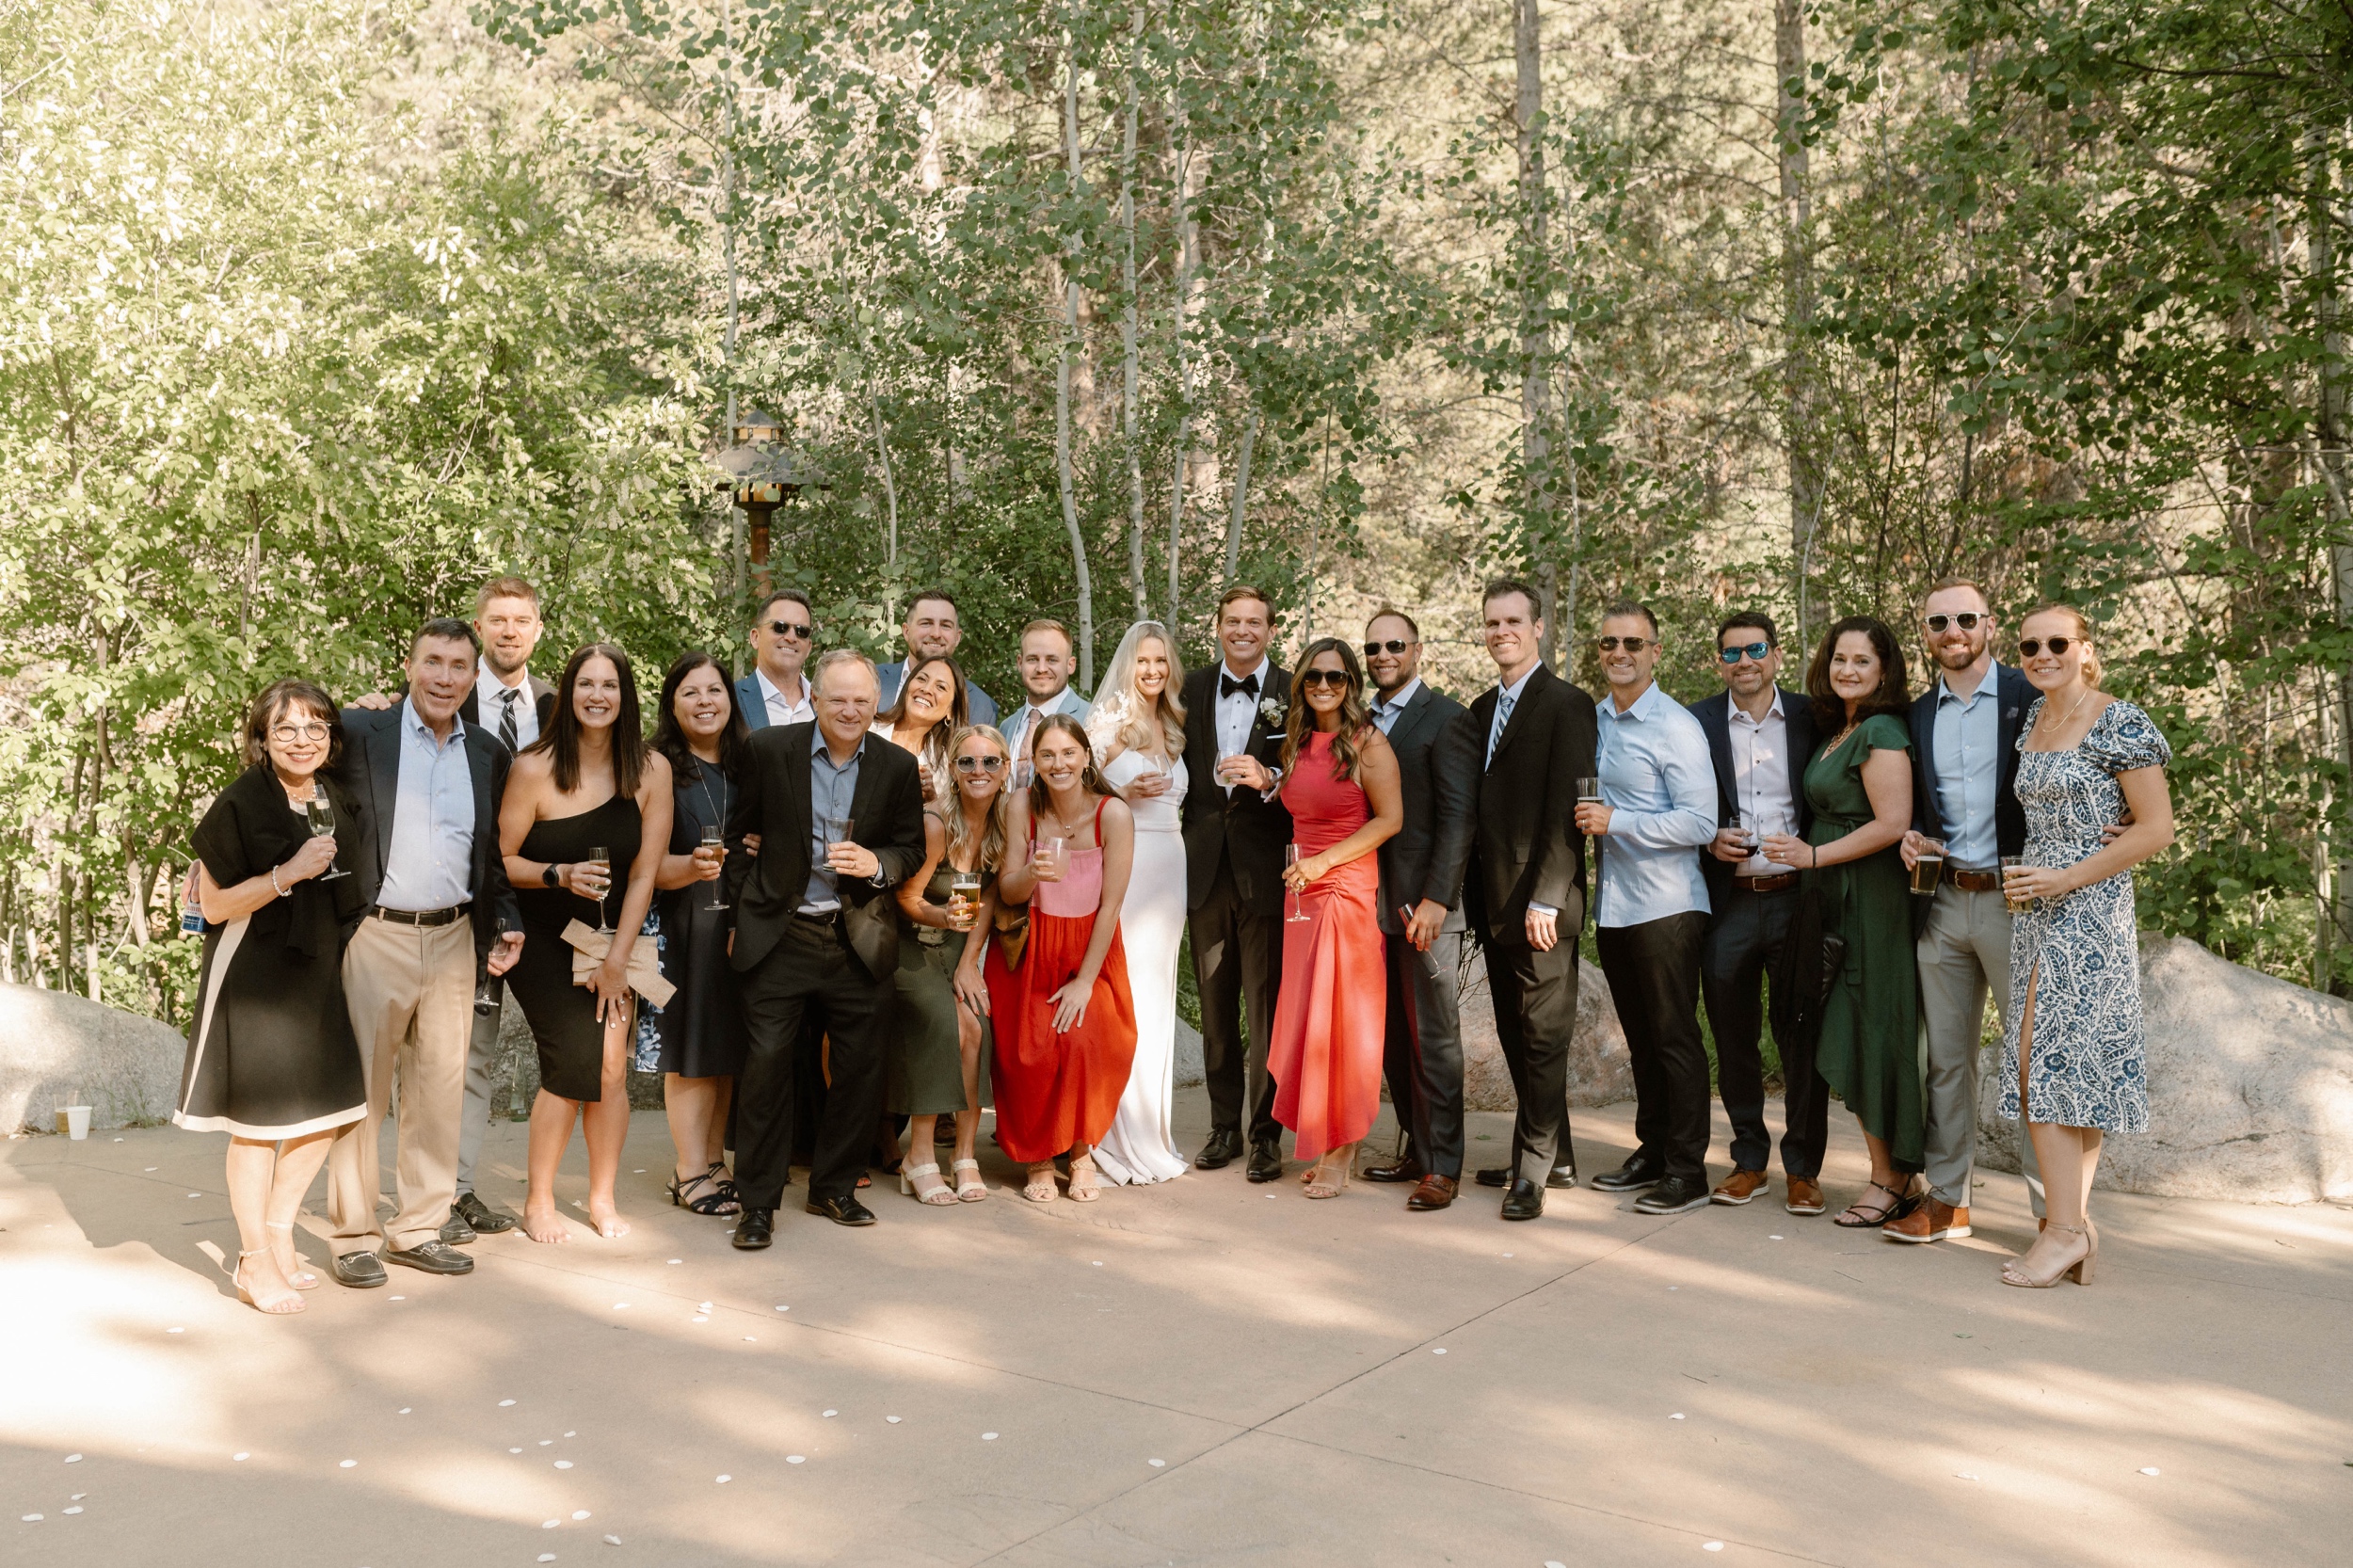 Candid wedding photos of guests at a wedding in Vail, Colorado. Photo by Colorado wedding photographer Ashley Joyce.